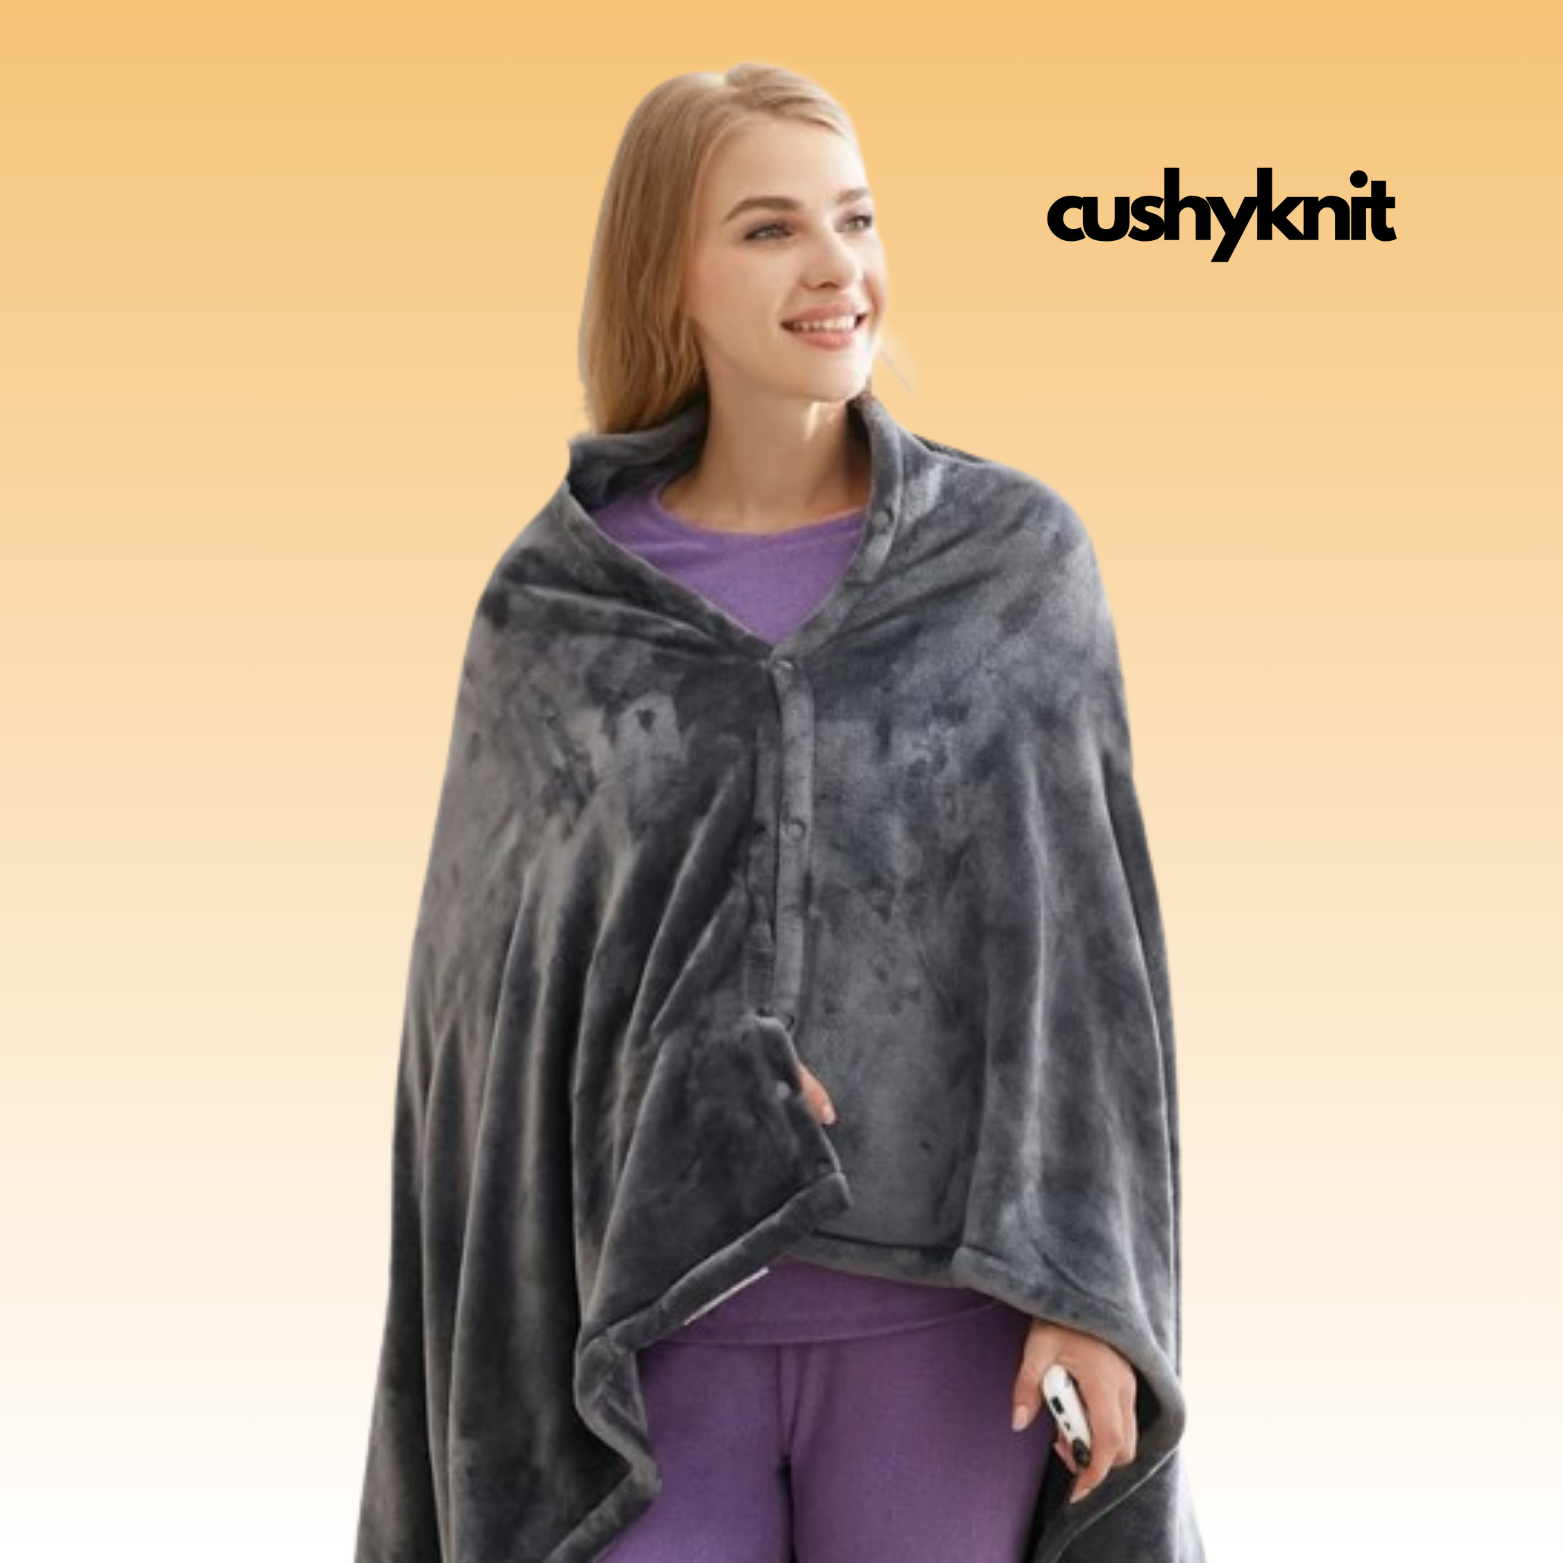 CUSHYKNIT - Beheizte Pullover Decke – CushyKnit